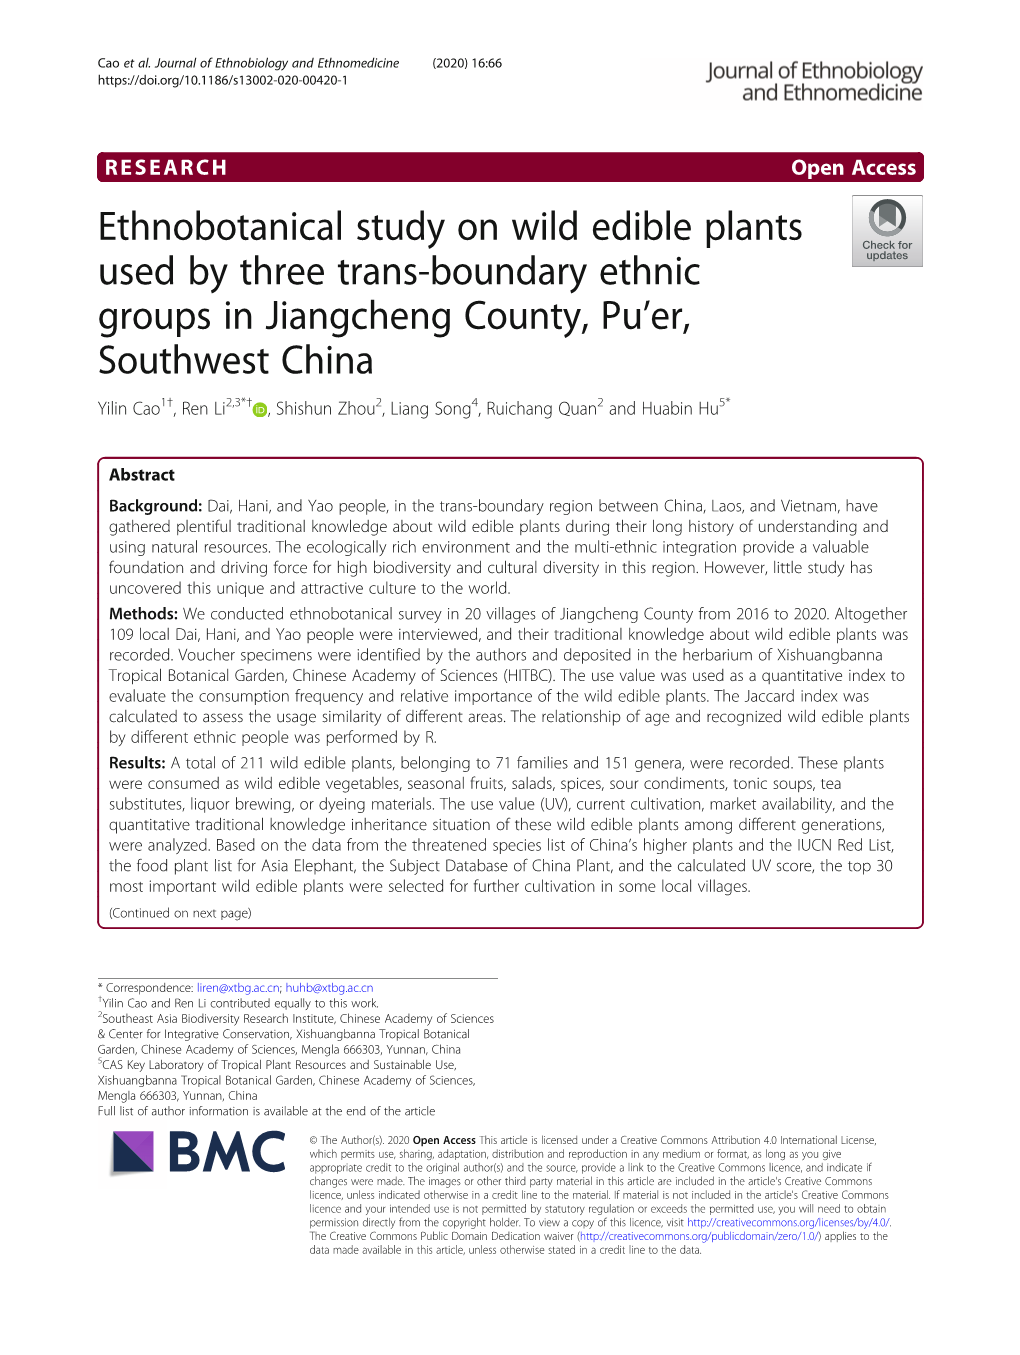 Ethnobotanical Study on Wild Edible Plants Used by Three Trans-Boundary Ethnic Groups in Jiangcheng County, Pu'er, Southwest C